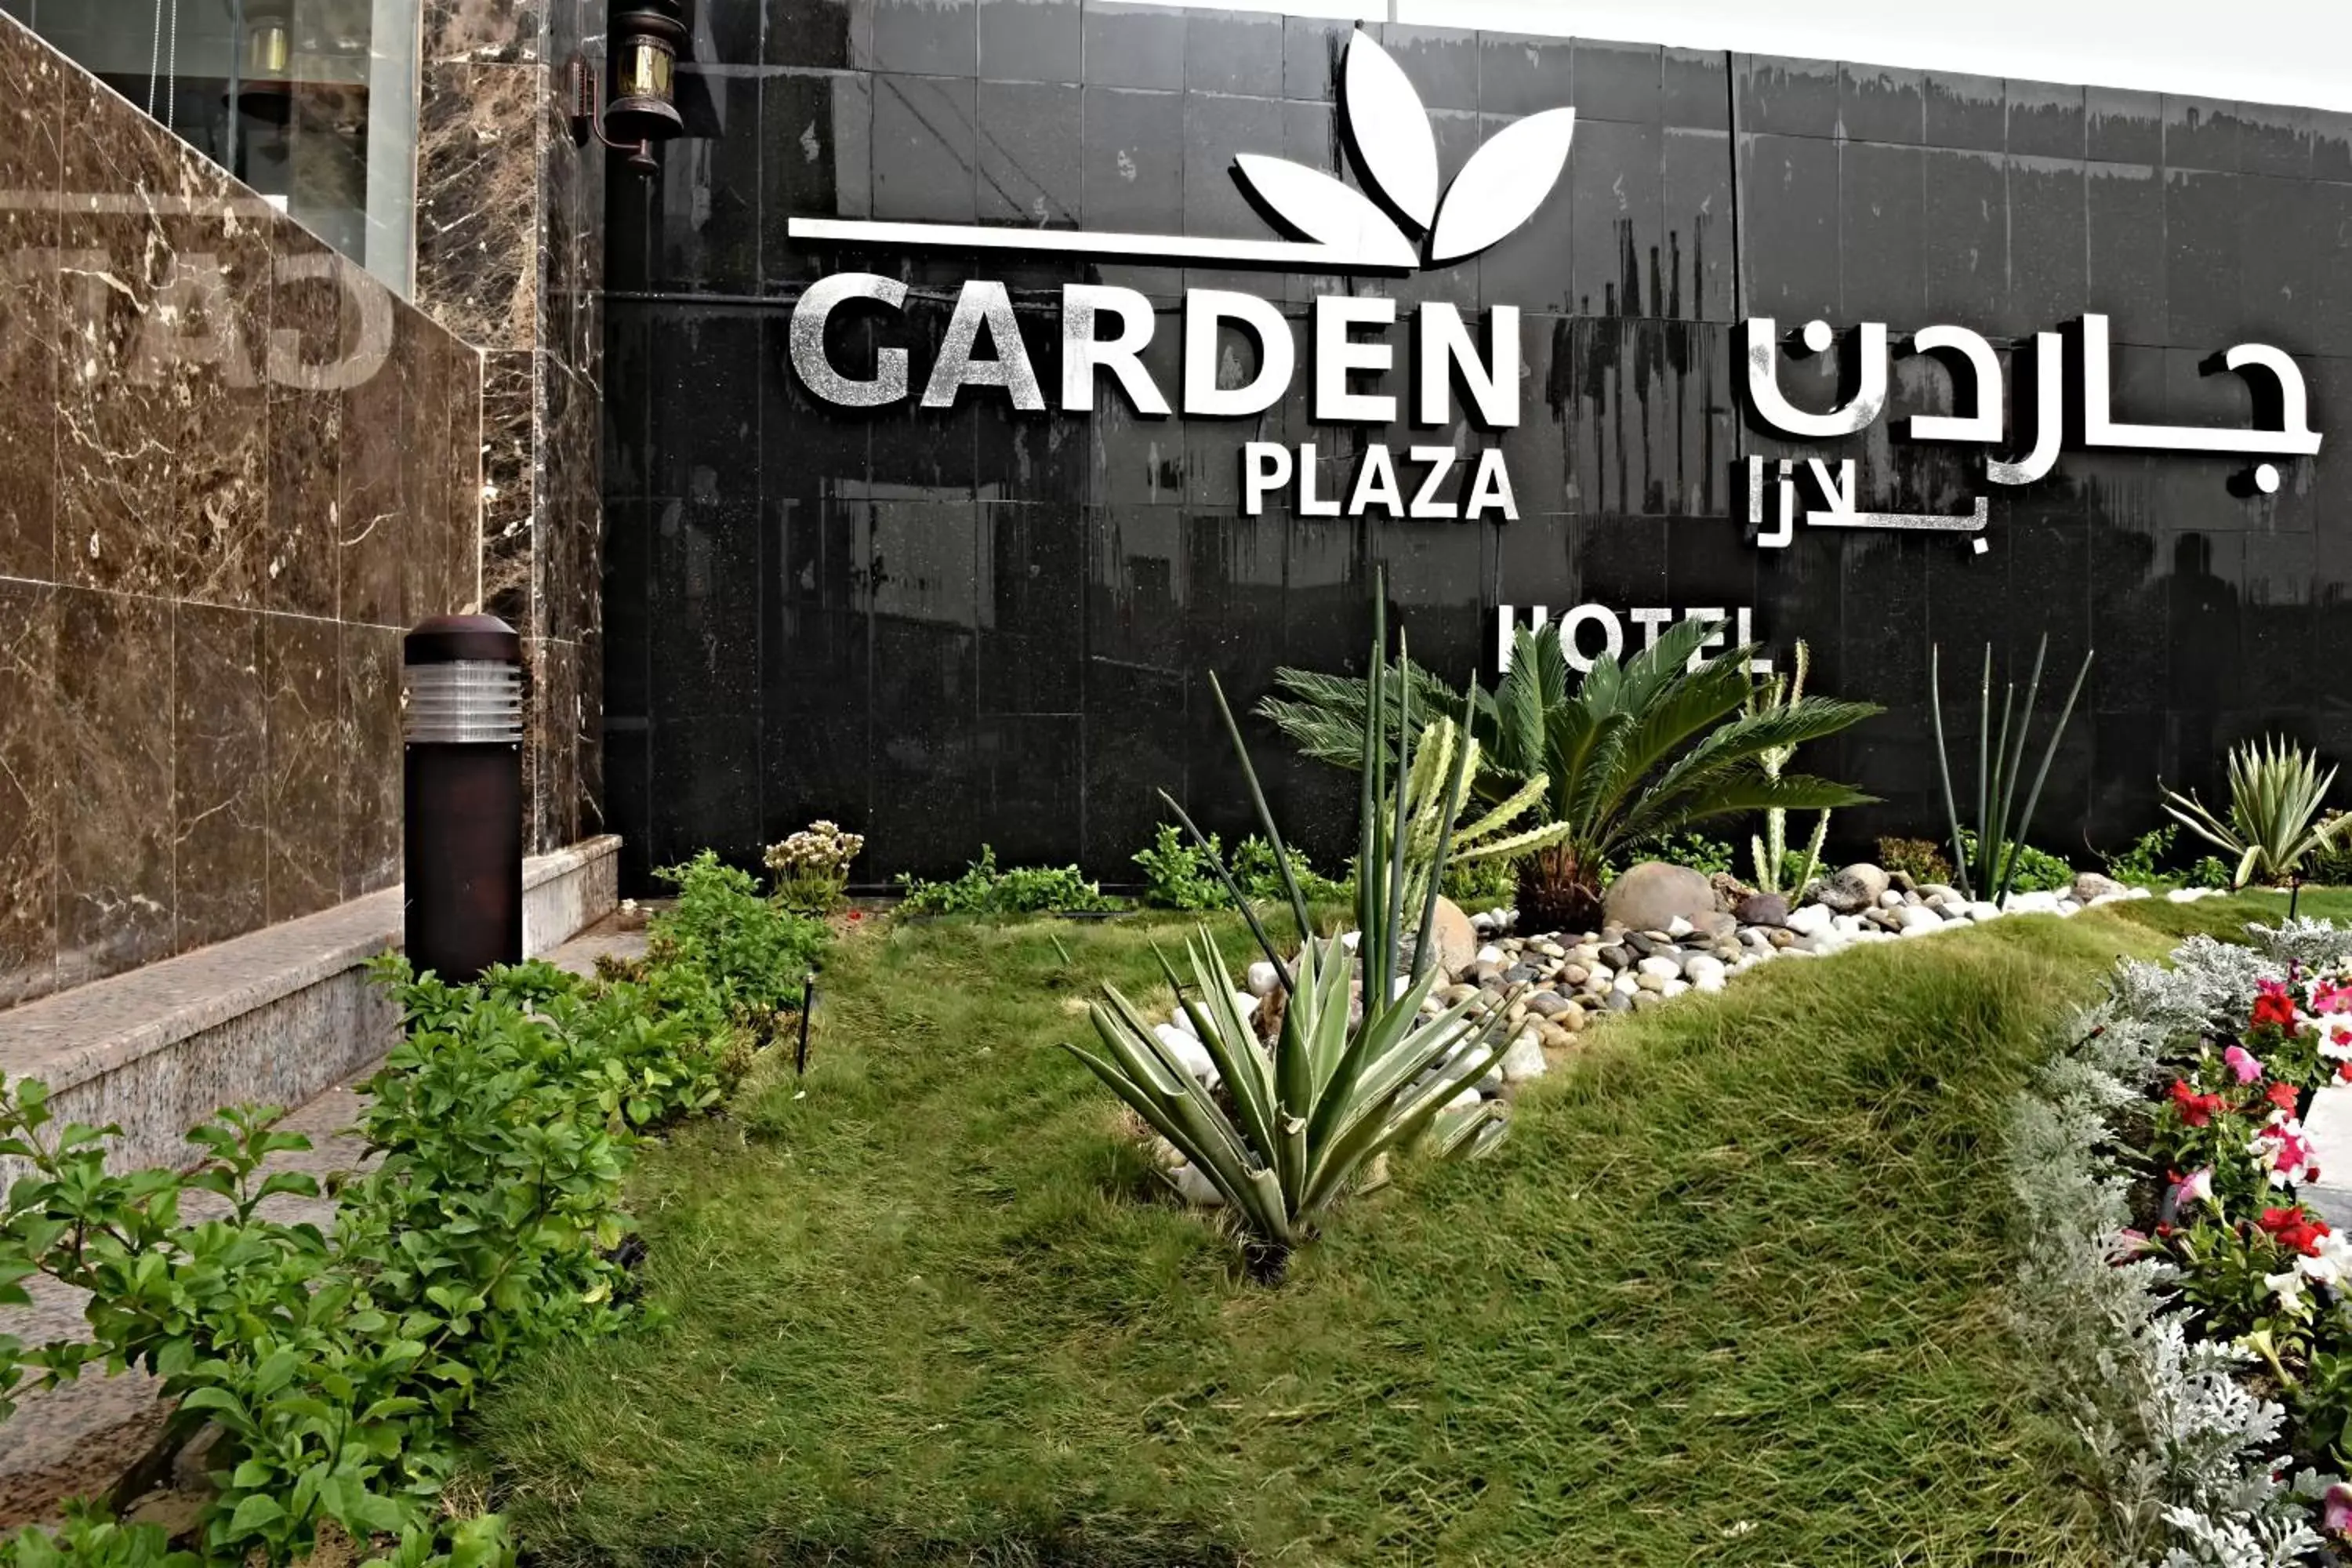 Property logo or sign, Property Logo/Sign in Garden Plaza Hotel